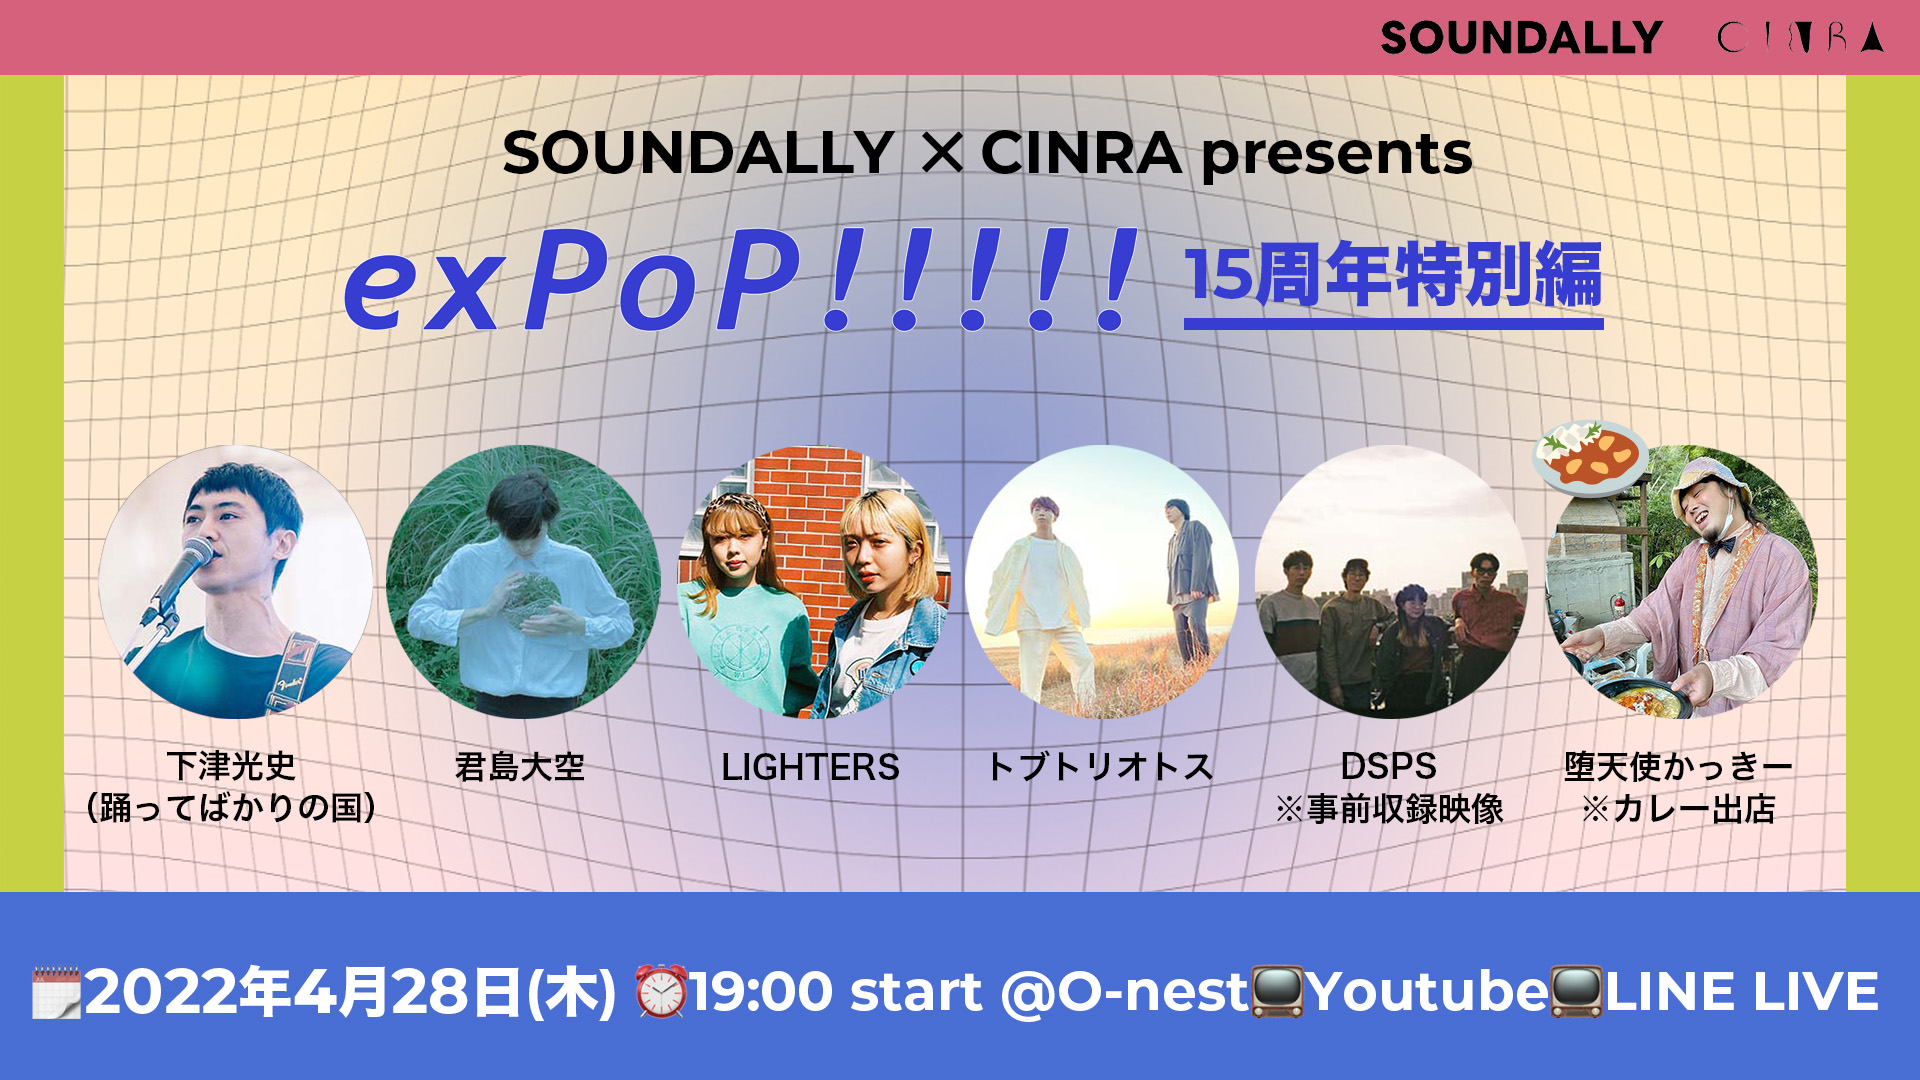 SOUNDALLY × CINRA presents『exPoP!!!!! 15周年特別編』